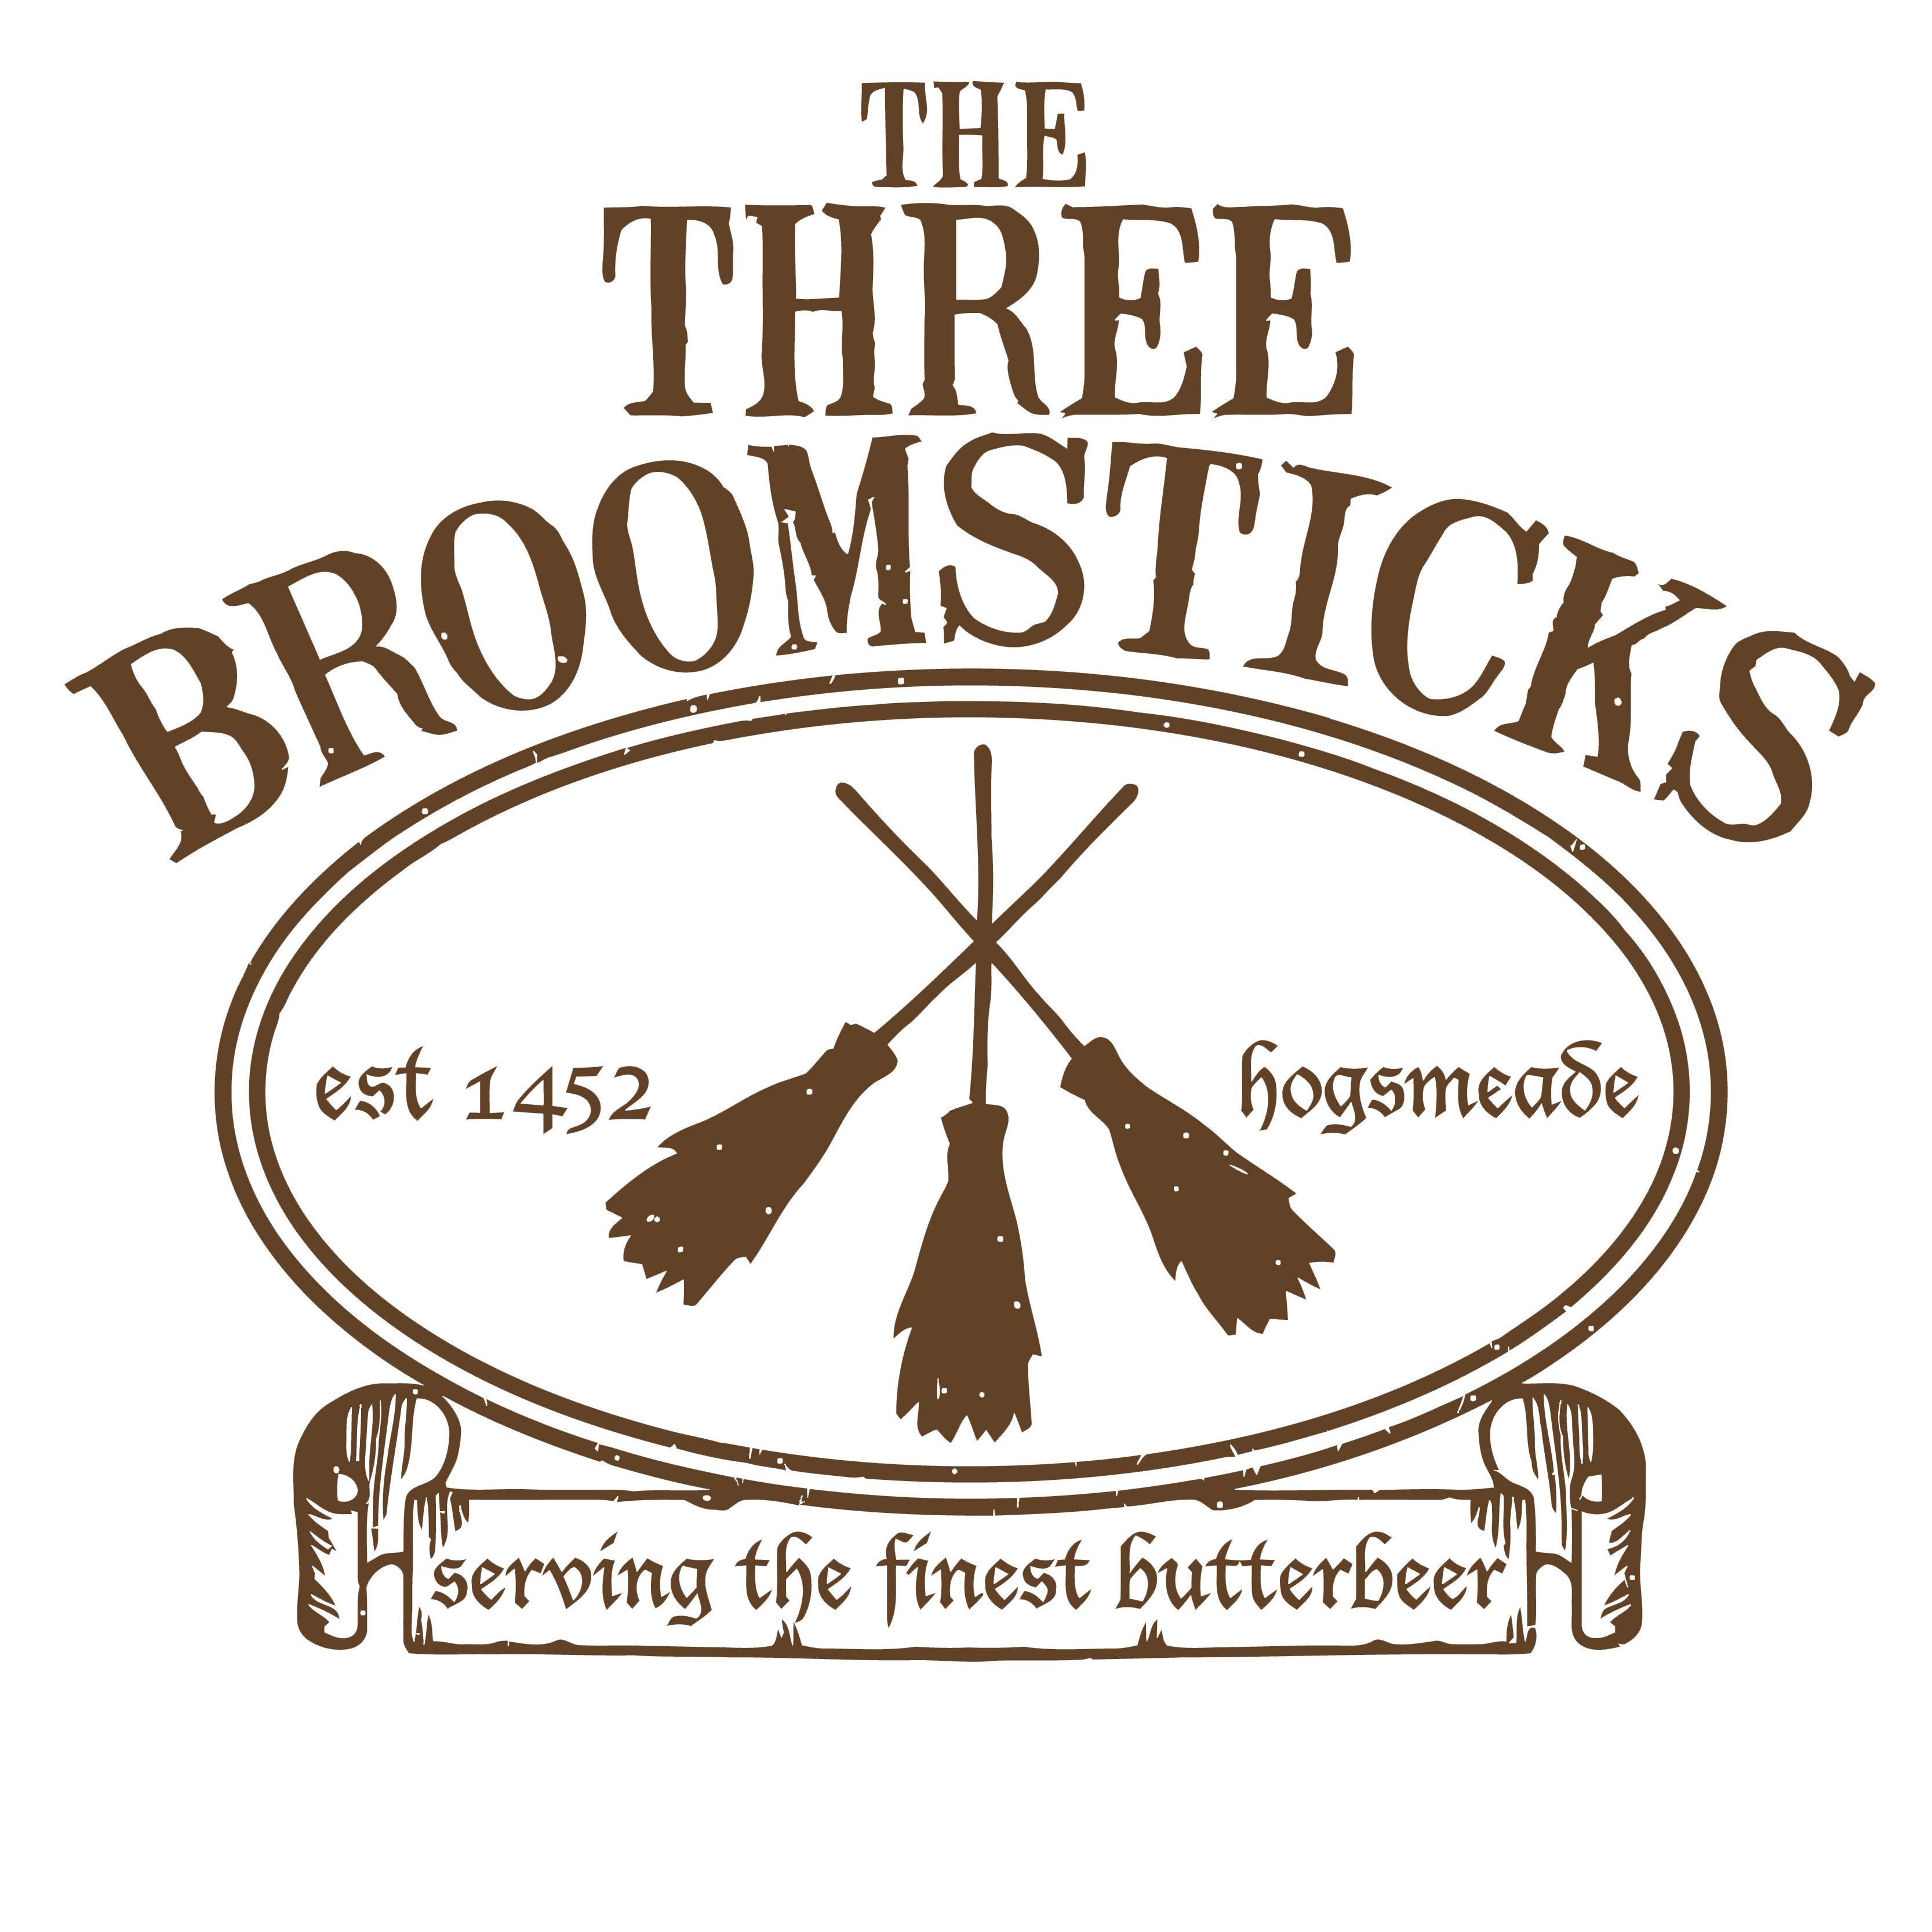 the three broomsticks